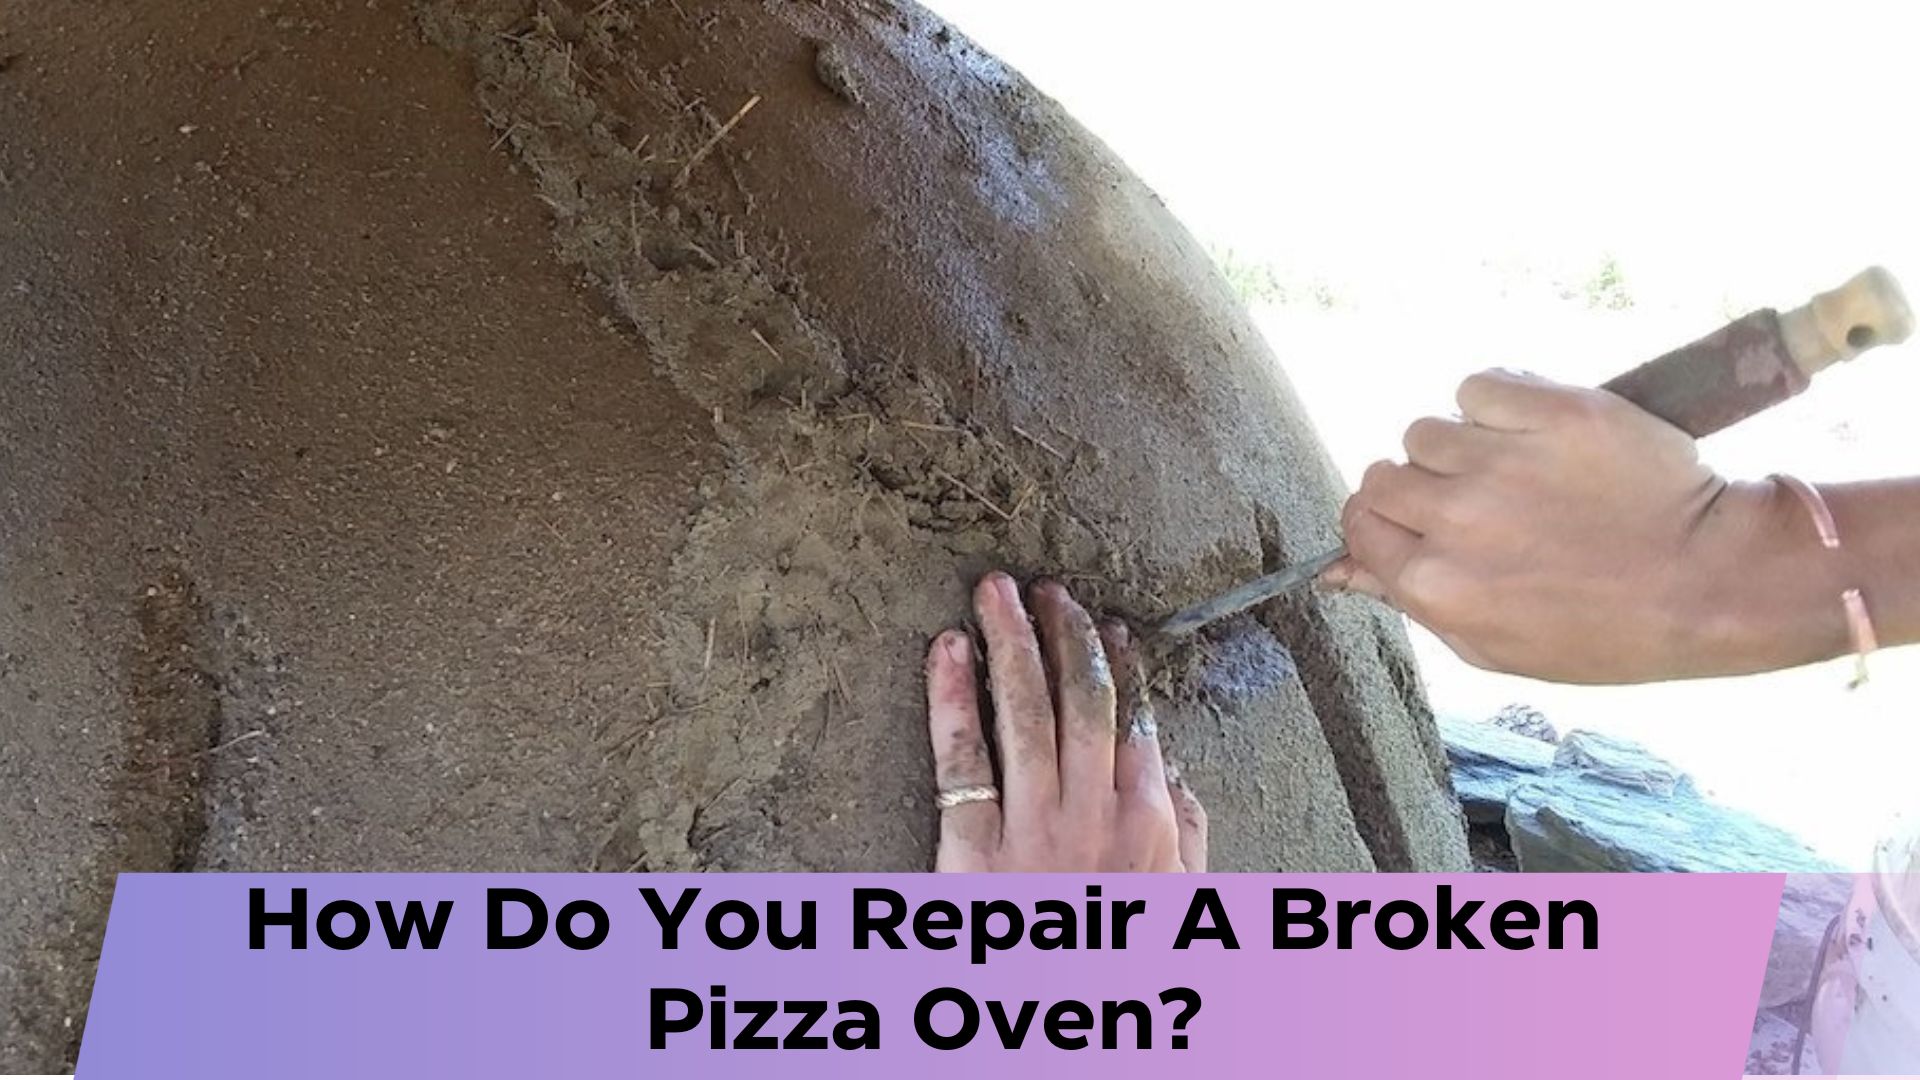 How Do You Repair A Broken Pizza Oven?